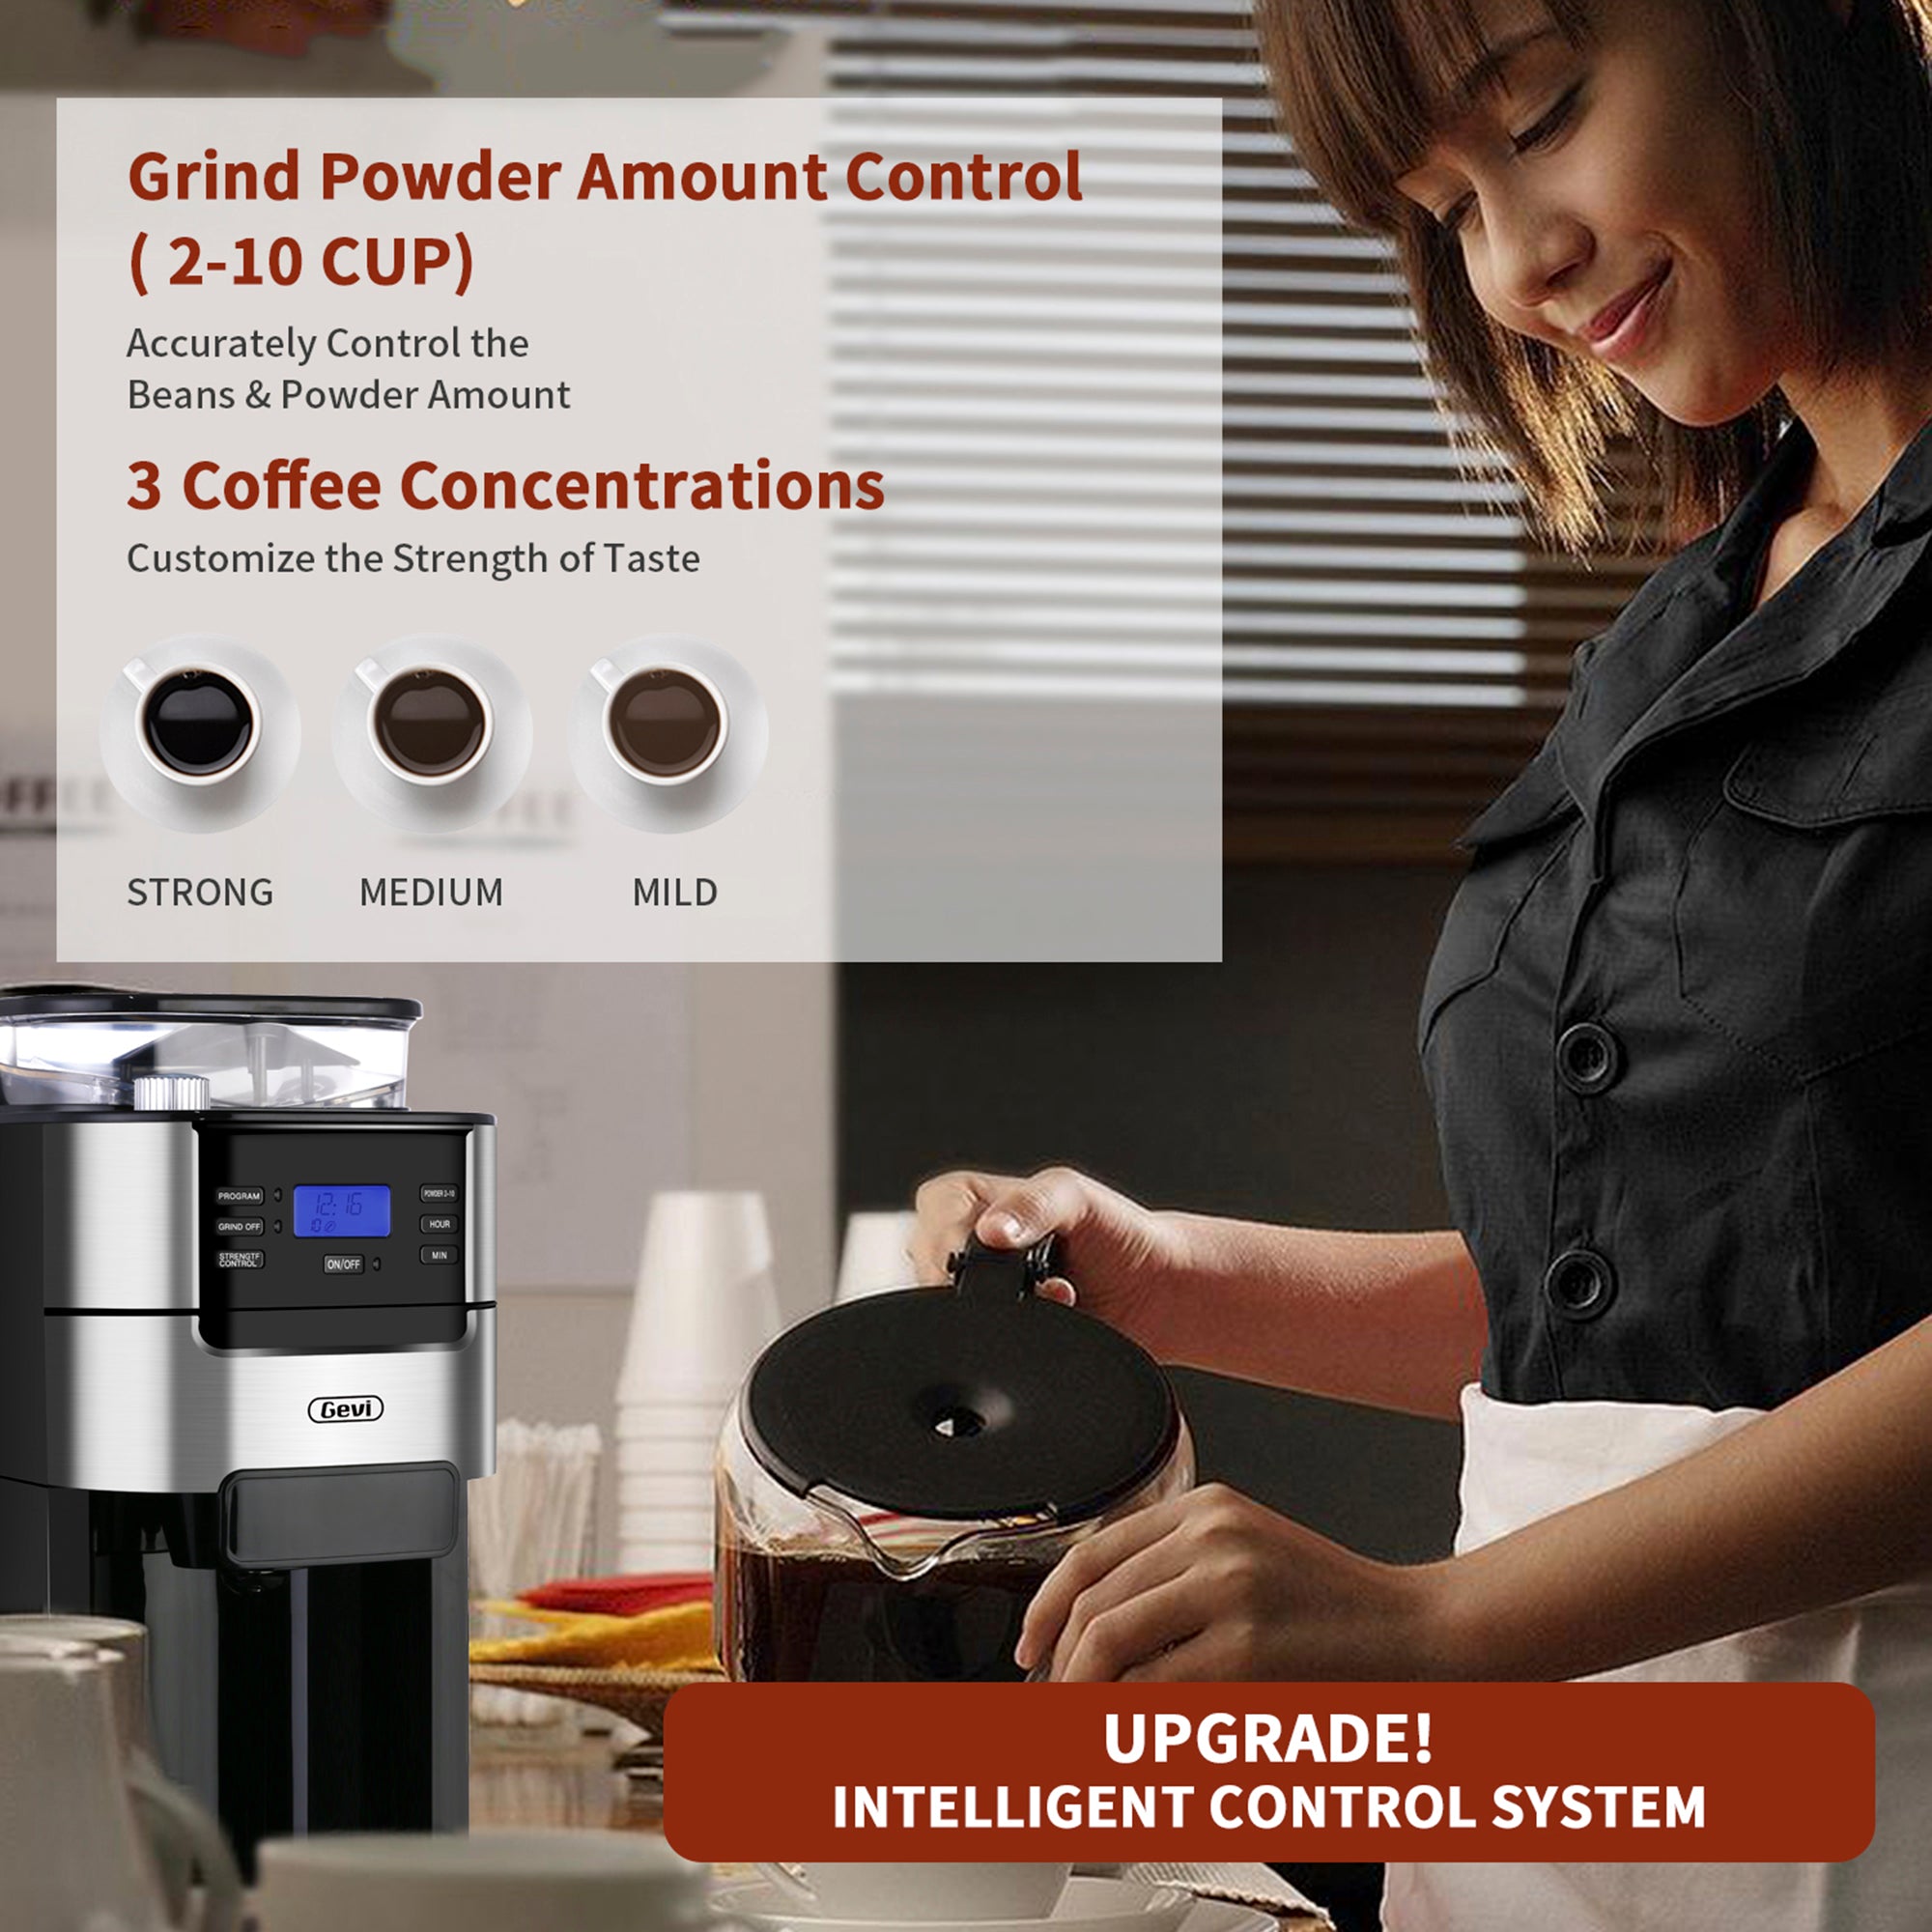 Gevi 10-Cup Grind and Brew Coffee Machine with Burr Grinder – GEVI